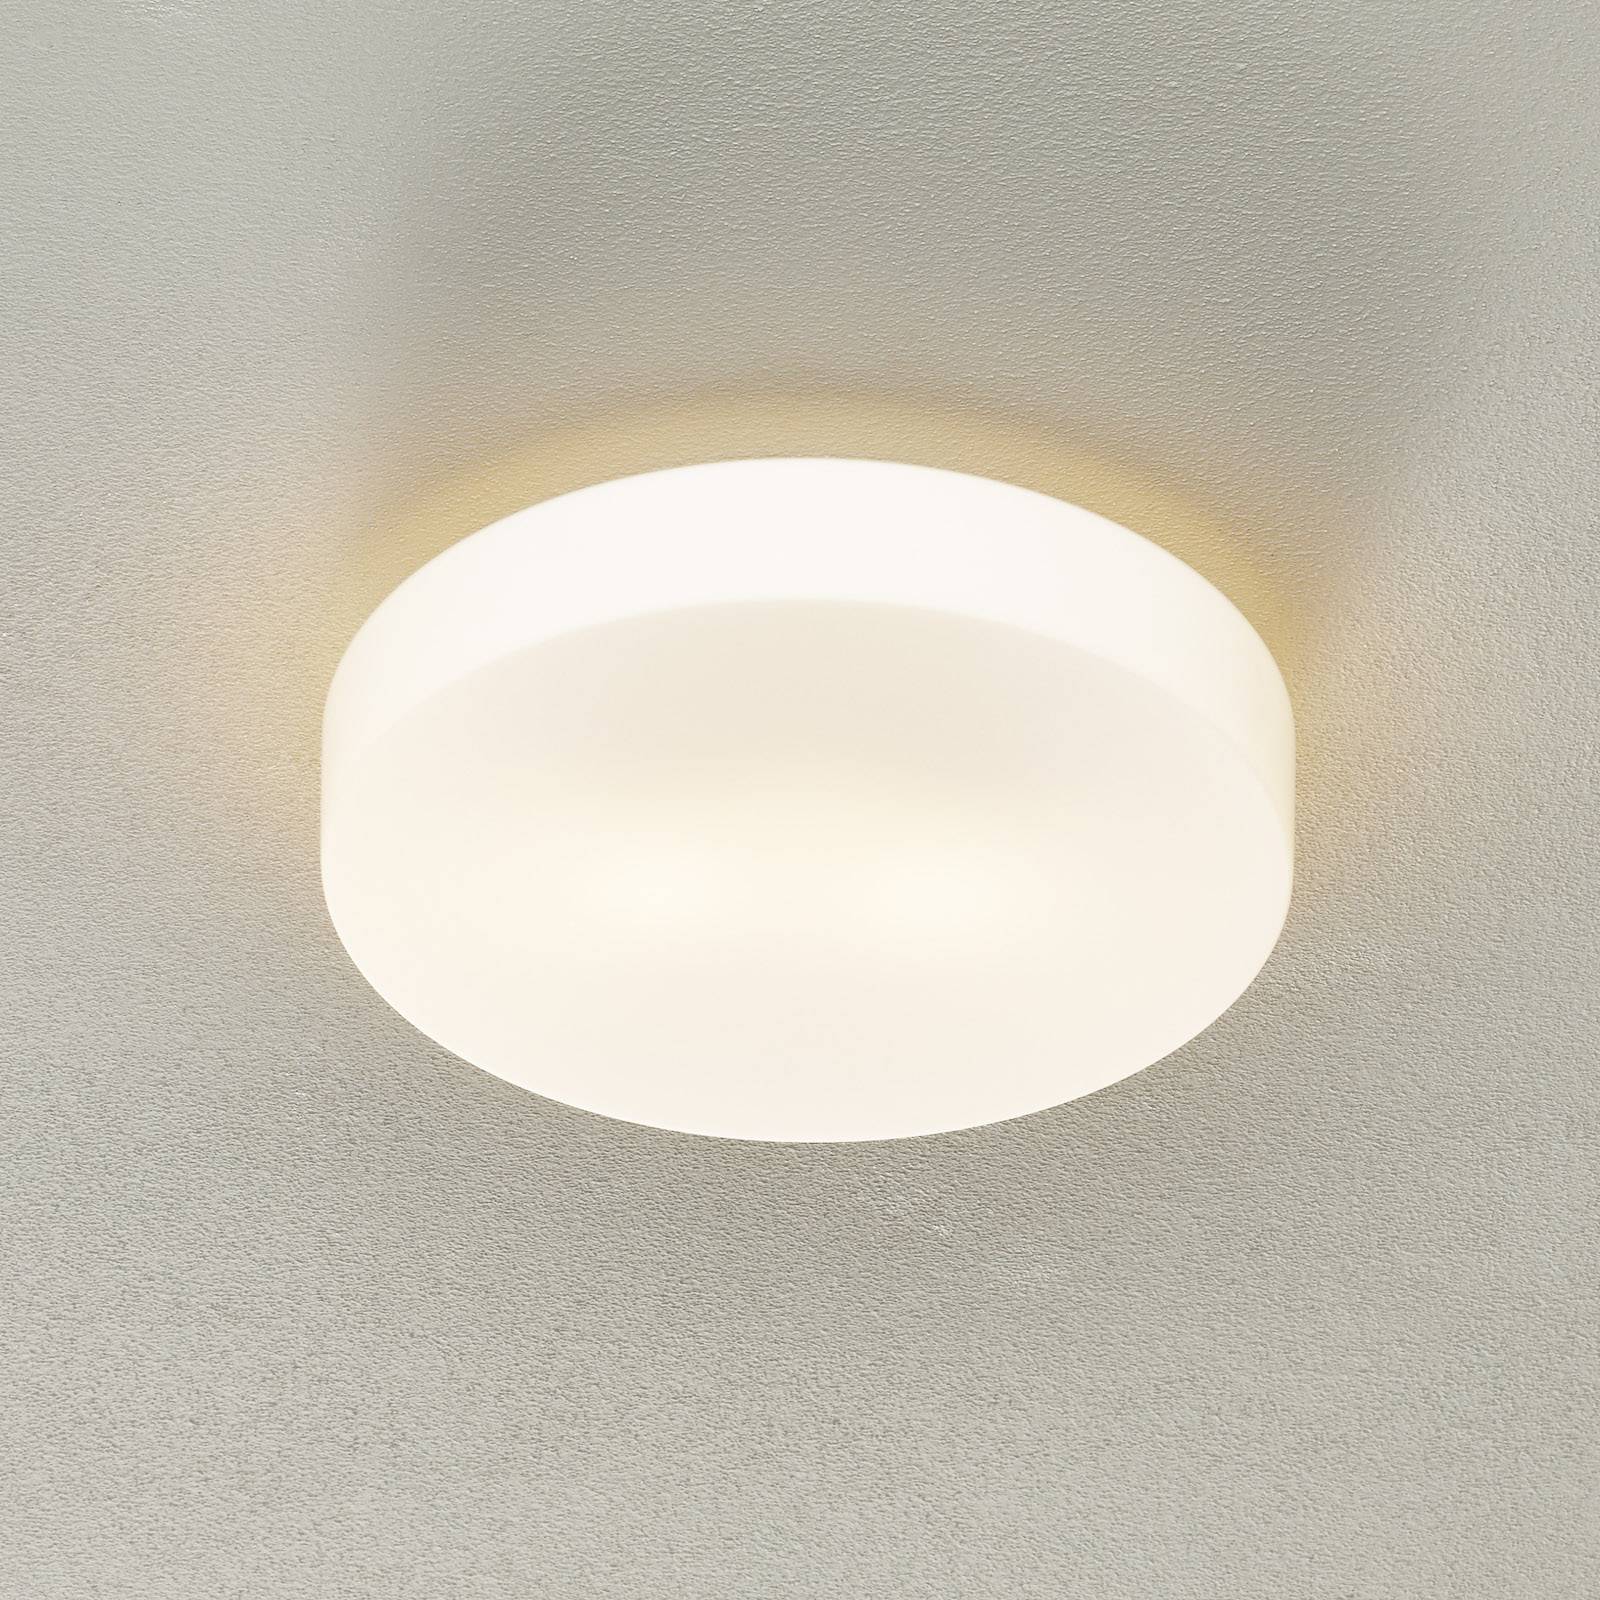 BEGA 89764 LED-Deckenlampe 3.000K E27 weiß Ø 34cm